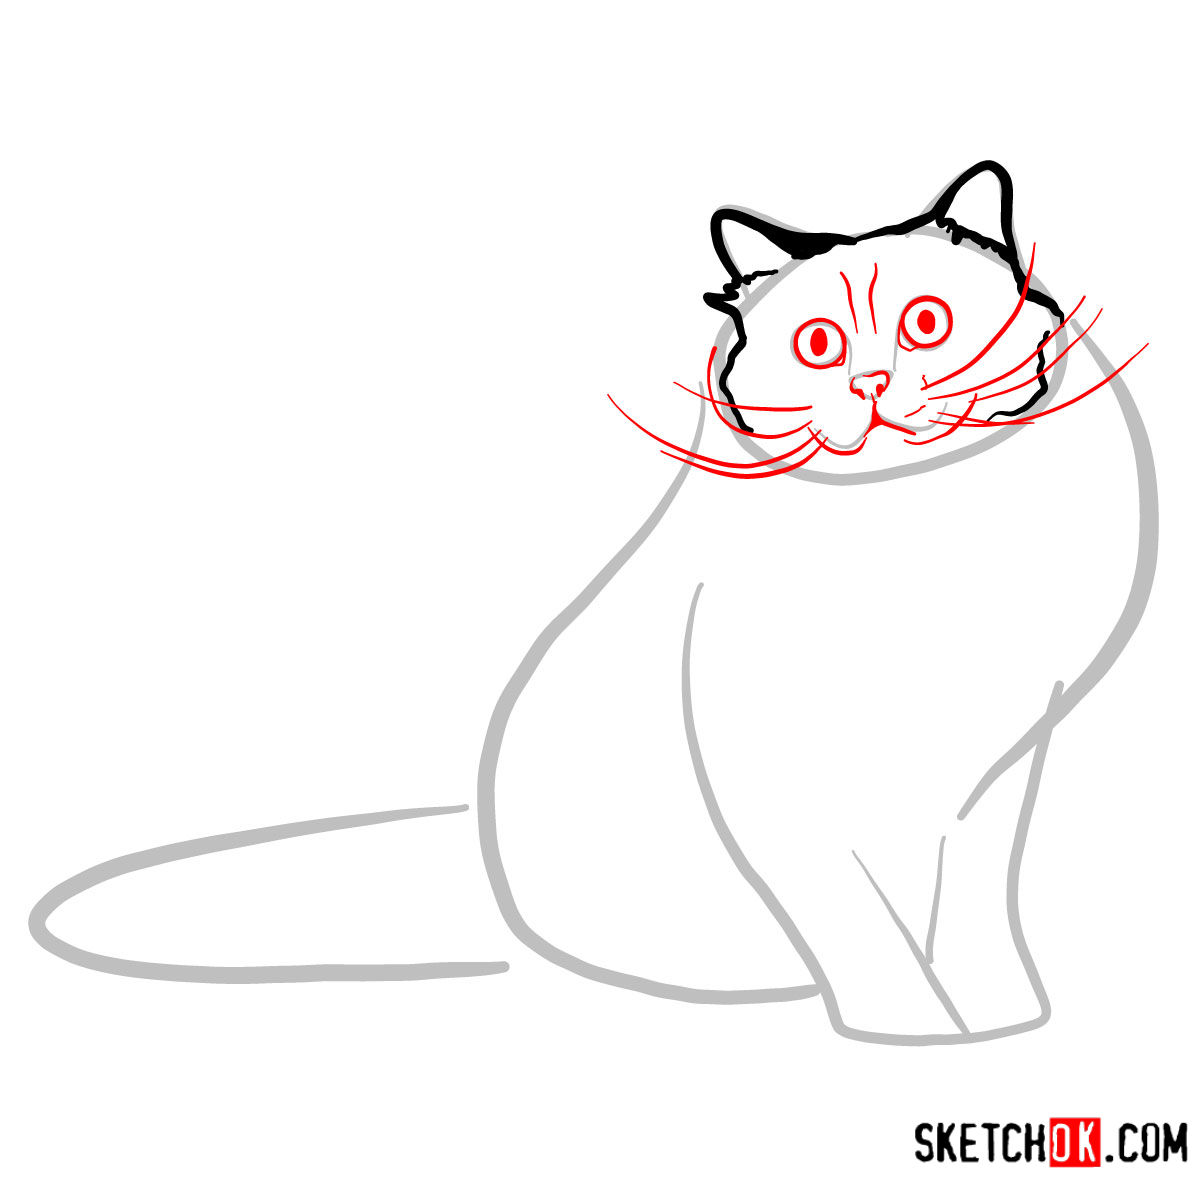 How to draw the Birman cat - step 03